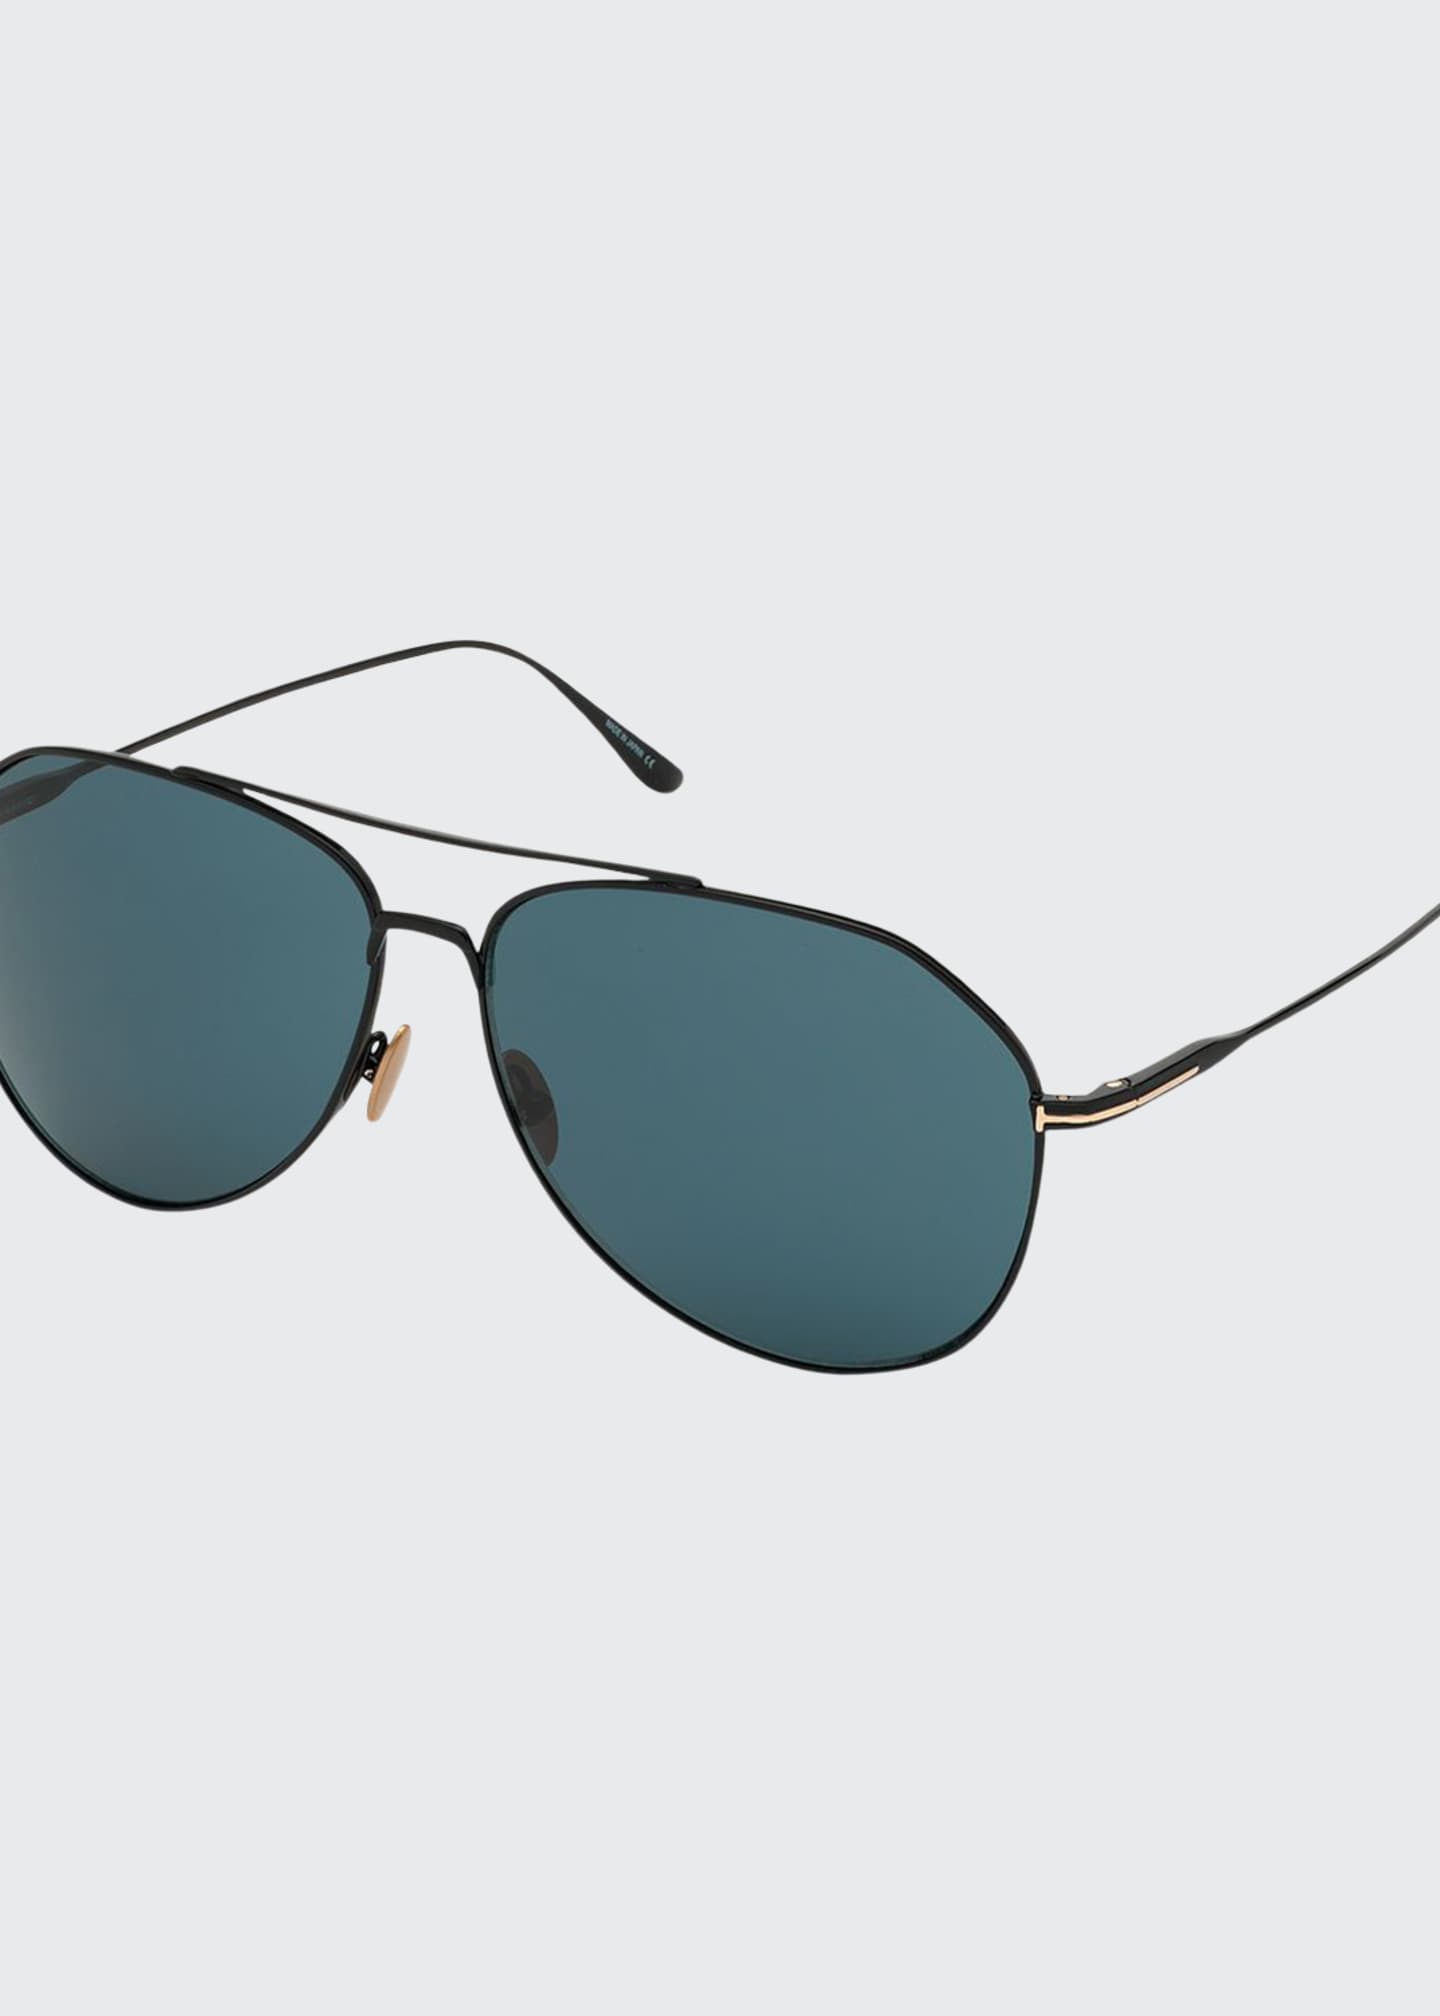 TOM FORD Cyrille Men's Aviator Sunglasses, Black/Gray